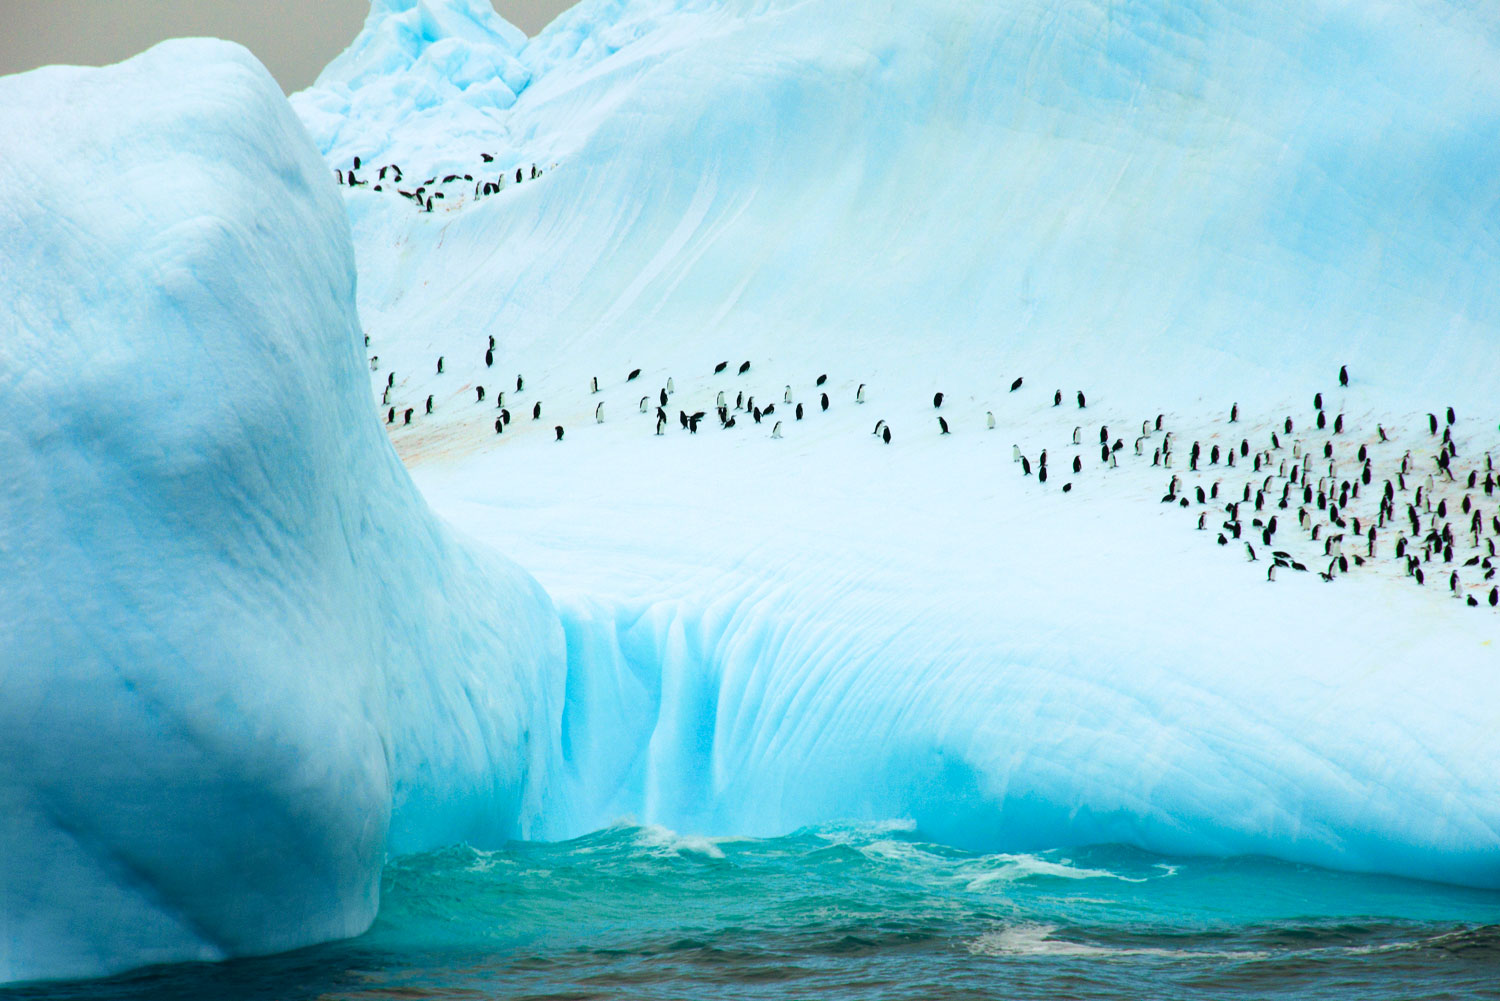 Penguins on South Orkney Island, Antartica.